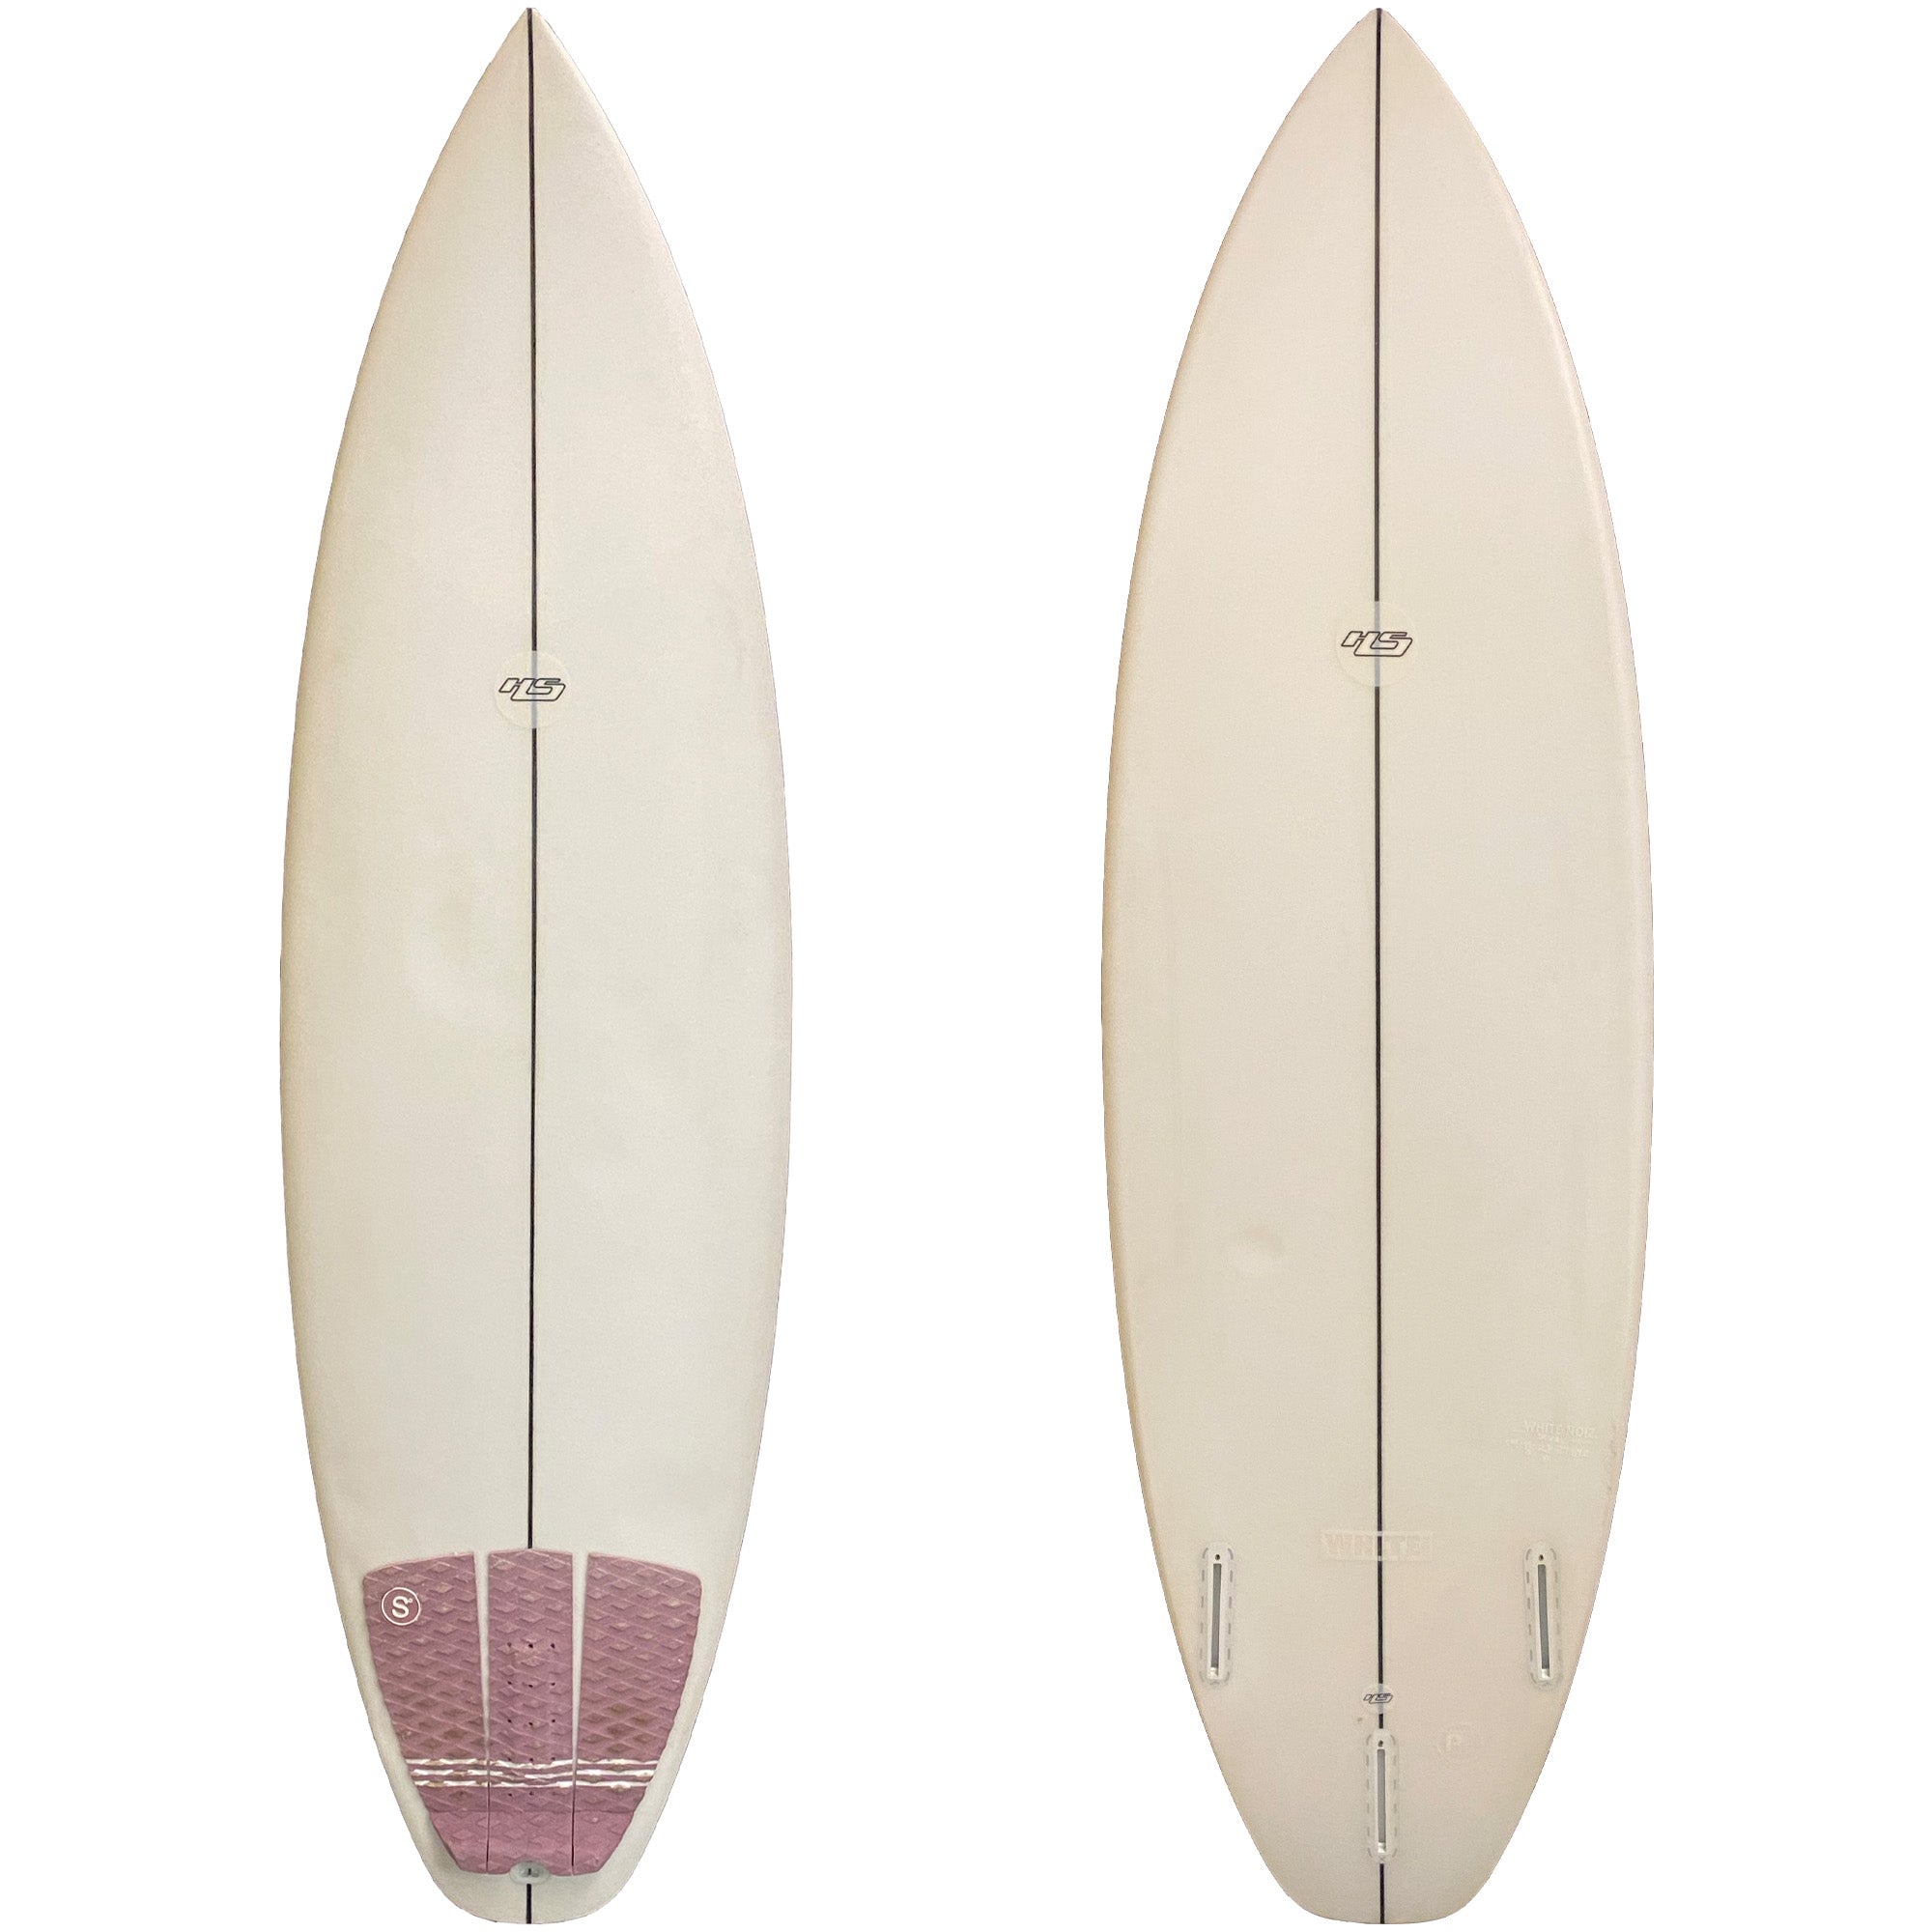 Hayden Shapes White Noiz 5'10 Used Surfboard